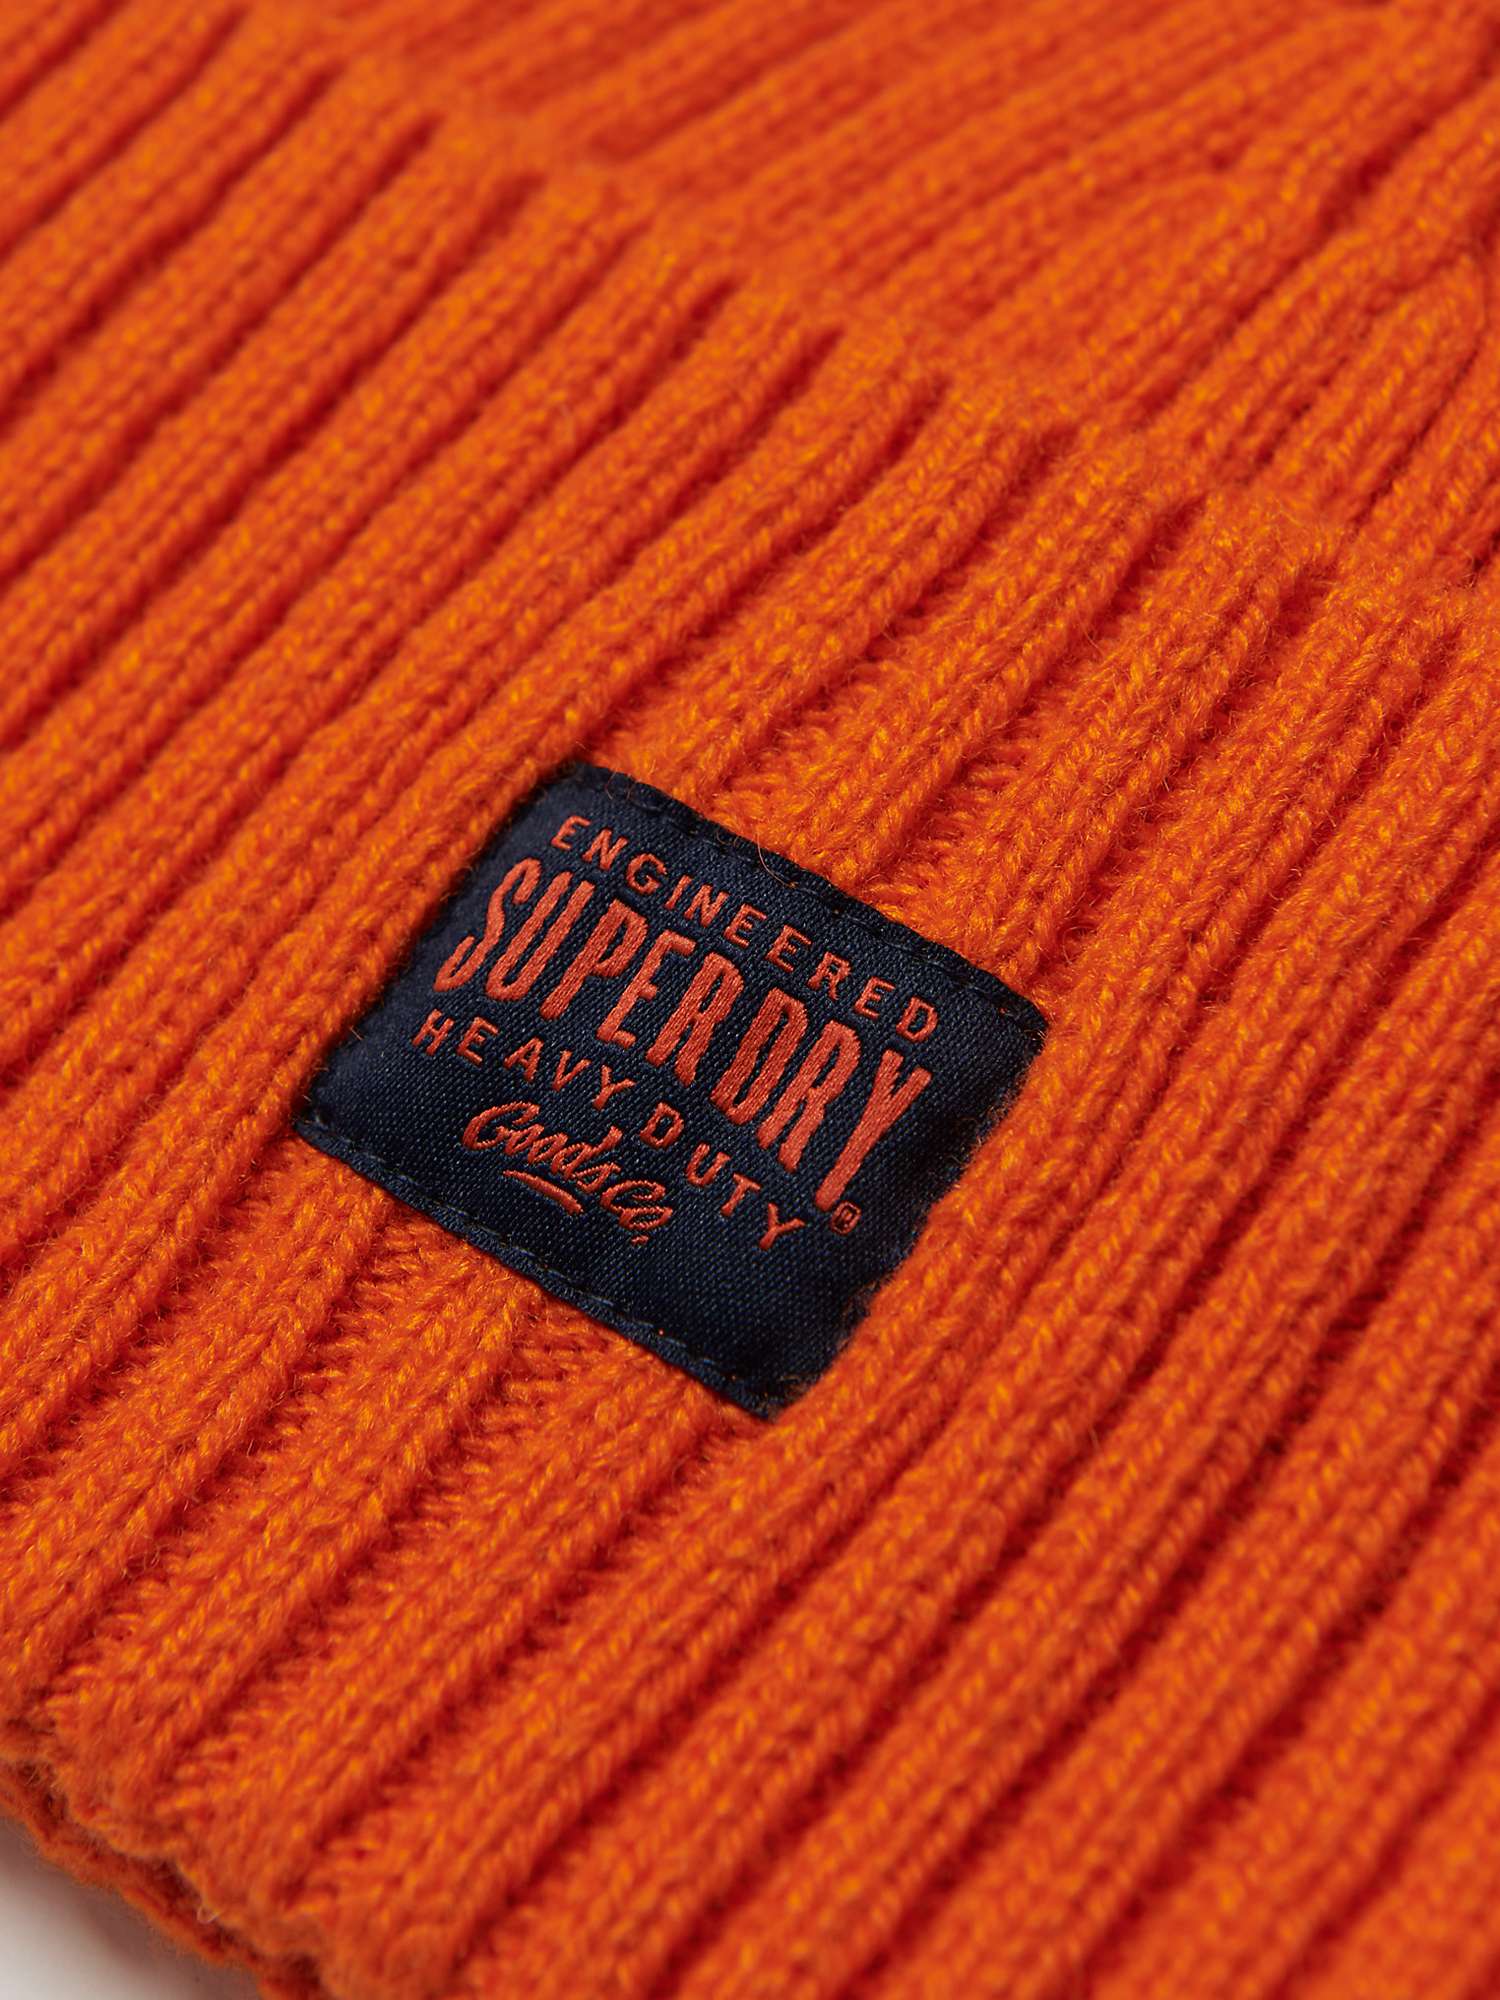 Superdry Workwear Beanie, Jaffa Orange at John Lewis & Partners